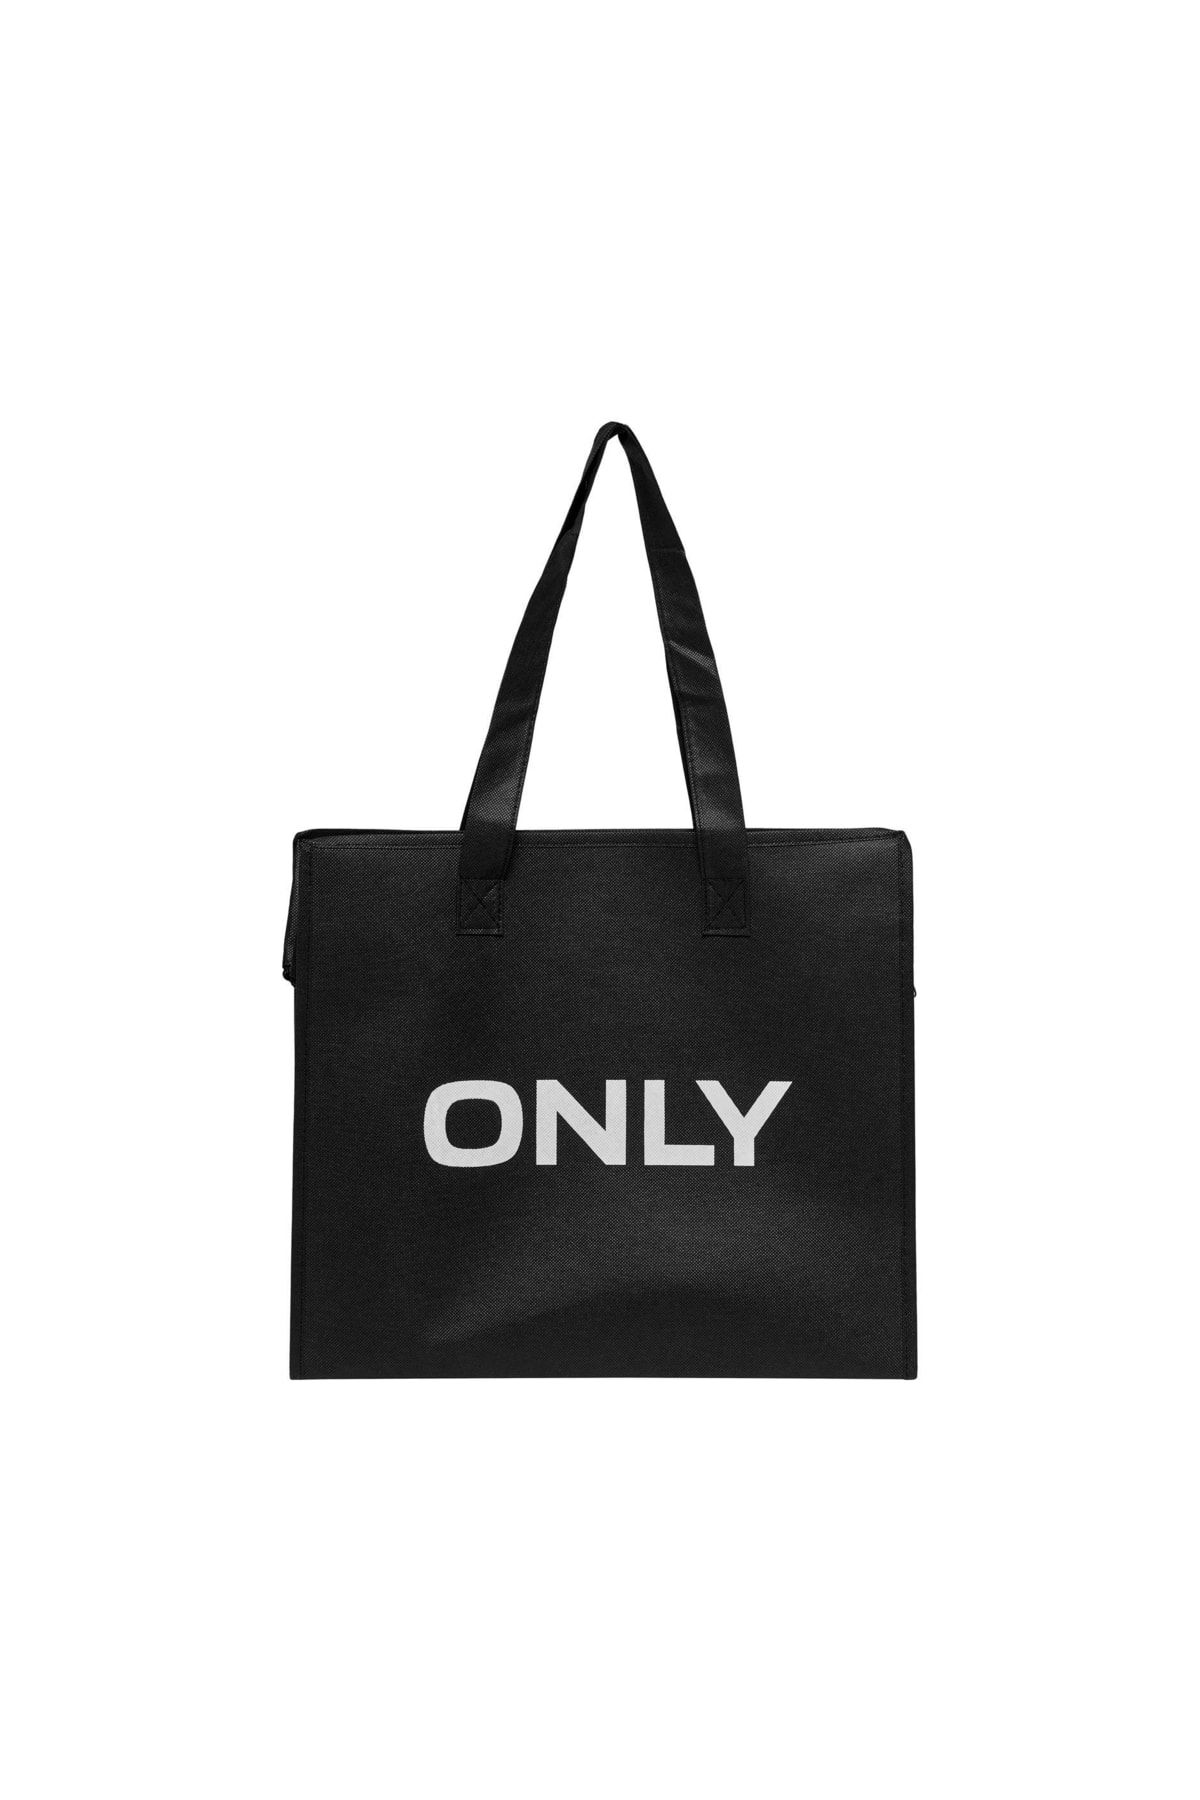 Only Shopping Bag Black Solid Kadın Siyah Çanta 15187681-02